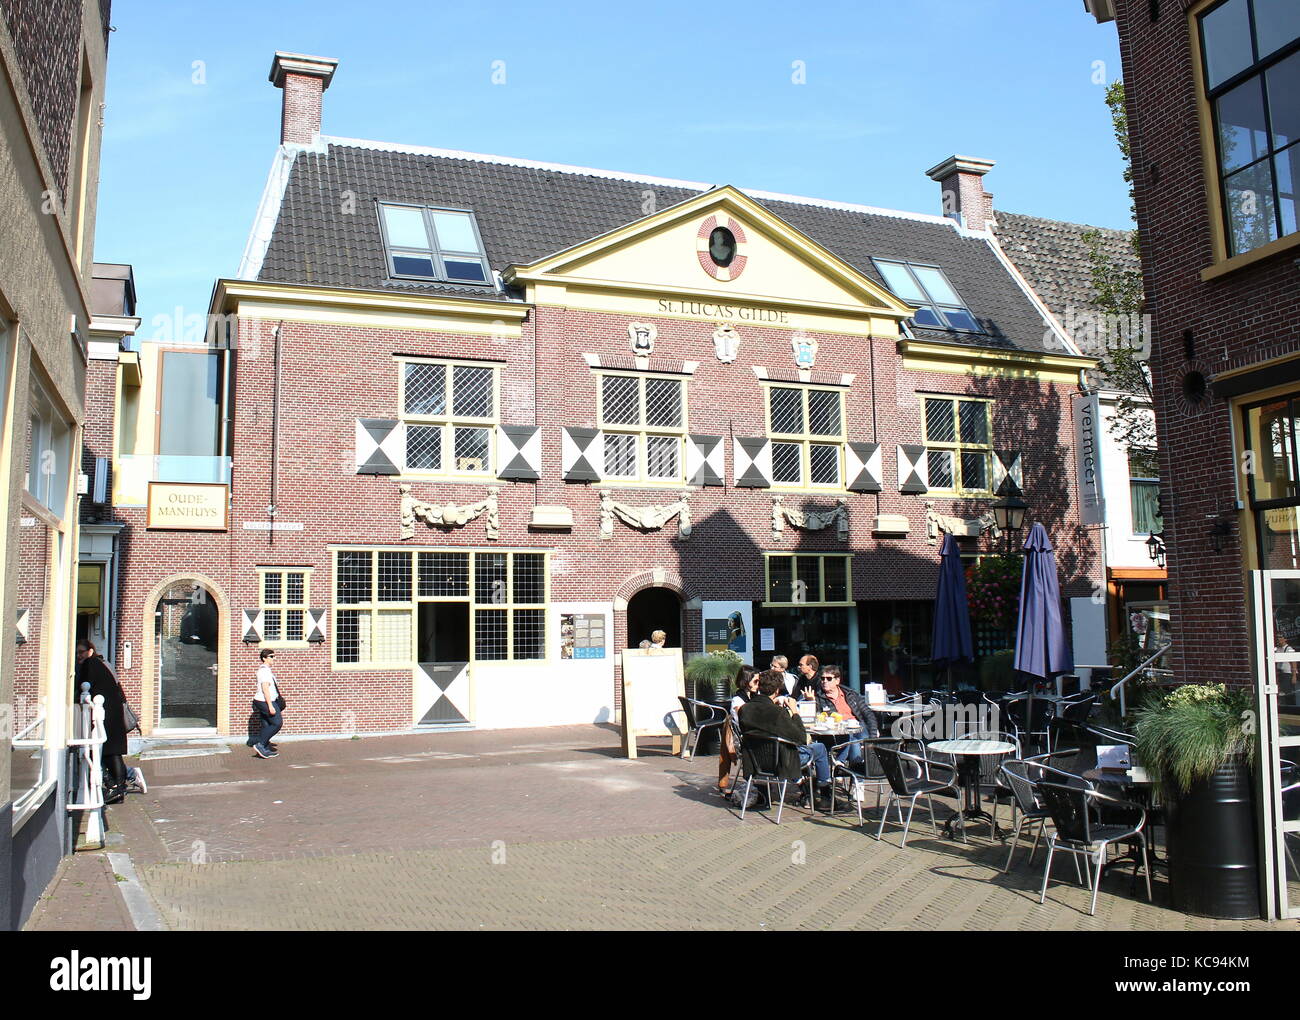 Vermeer Center am Voldersgracht, Delft, Niederlande. Museum und Informationszentrum des berühmten Malers Johannes Vermeer aus dem 17. Jahrhundert gewidmet. Stockfoto